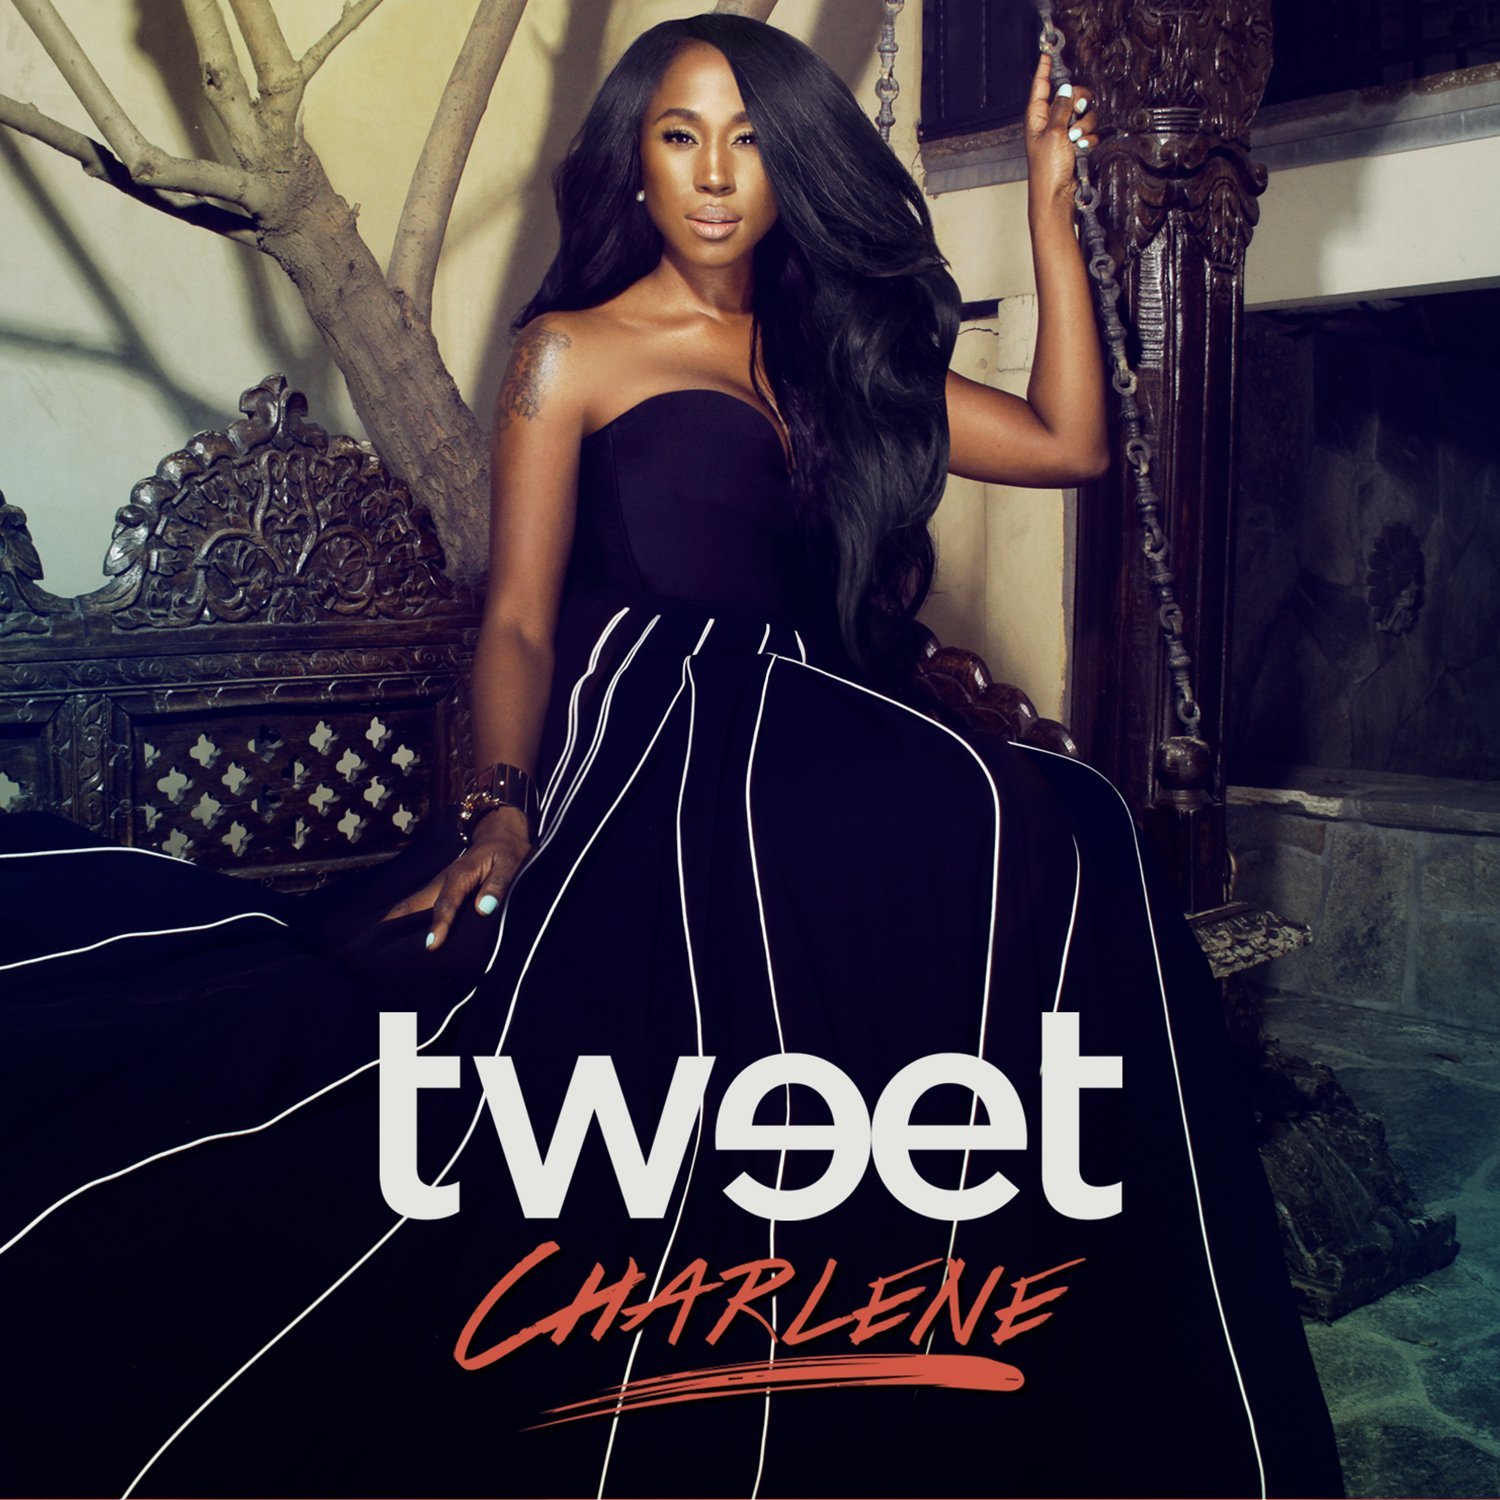 Tweet, Charlene © Entertainment One